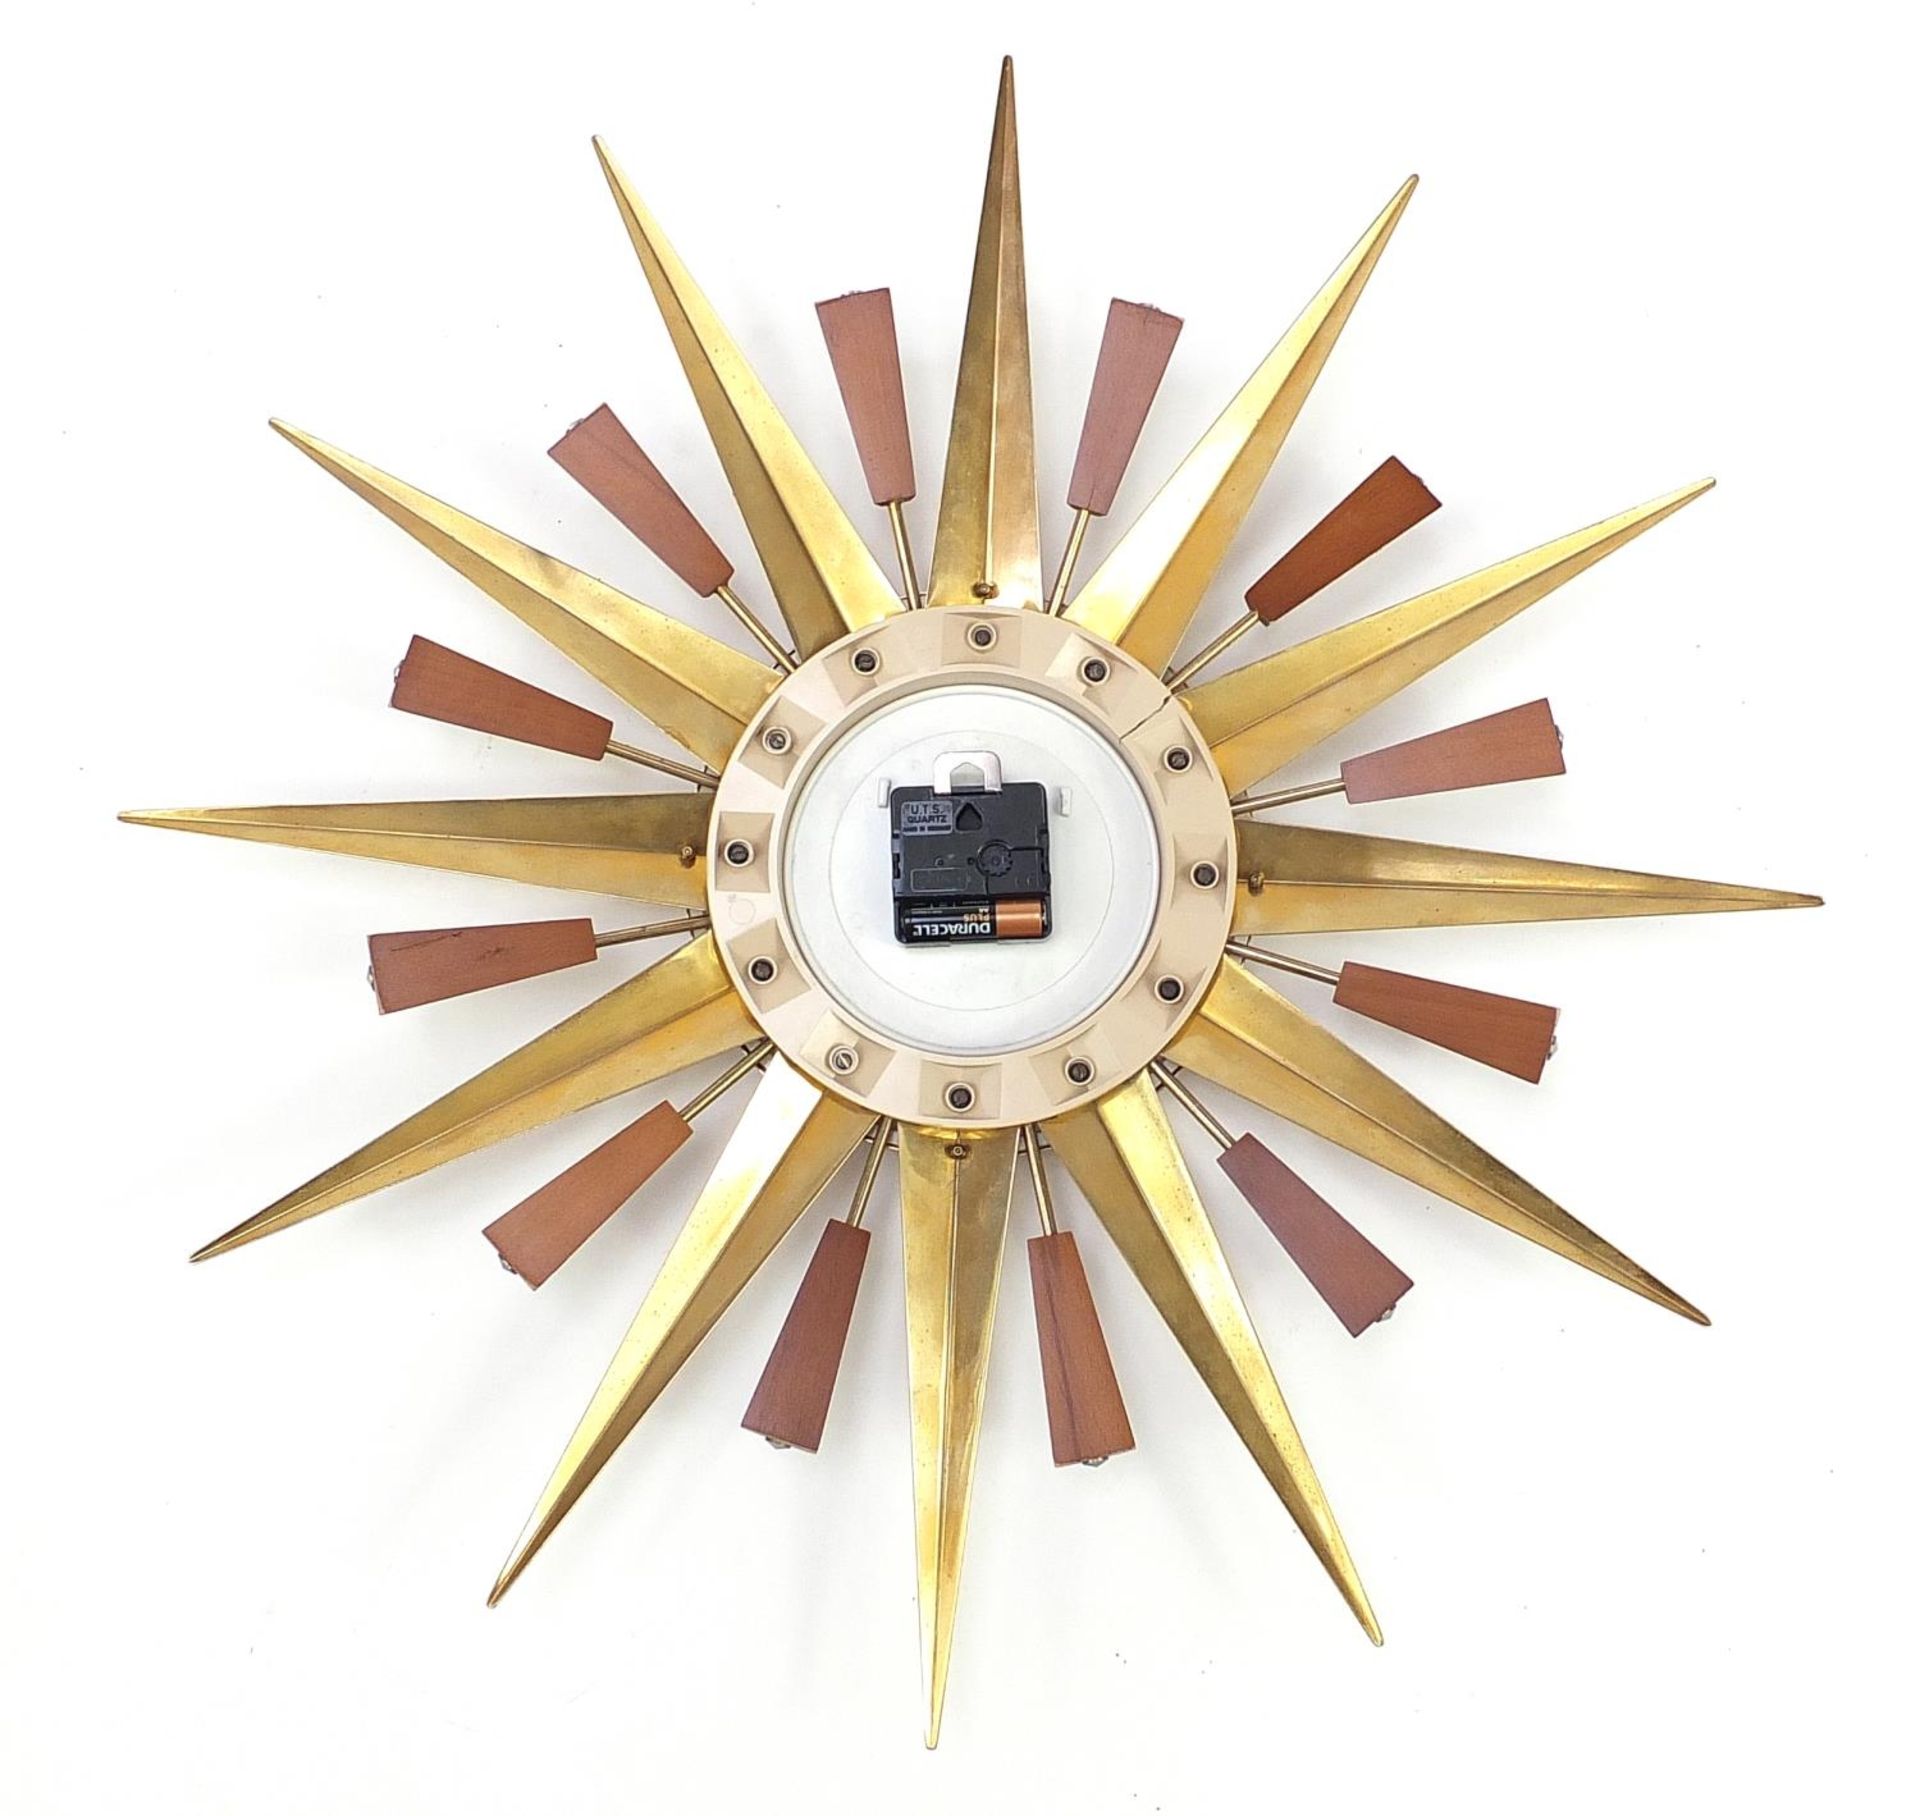 Vintage Metamec teak and brass sunburst design wall clock, 60cm in diameter - Image 2 of 2